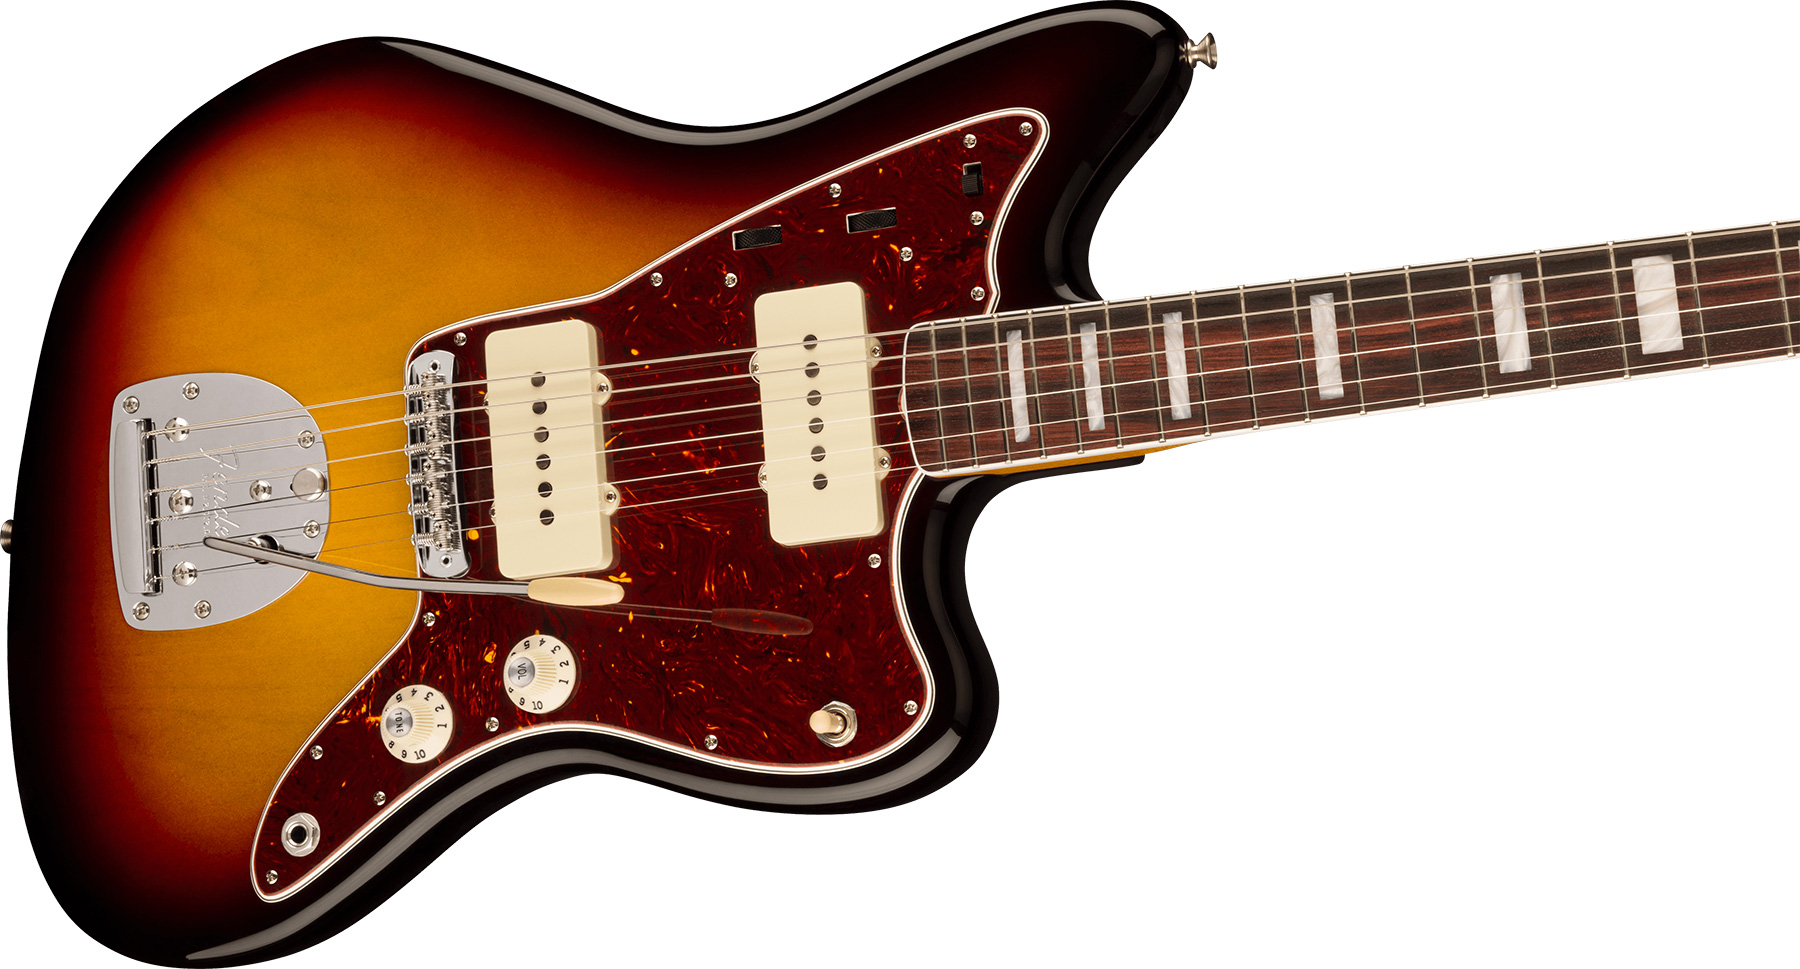 Fender Jazzmaster 1966 American Vintage Ii Usa Sh Trem Rw - 3-color Sunburst - Retro rock electric guitar - Variation 2